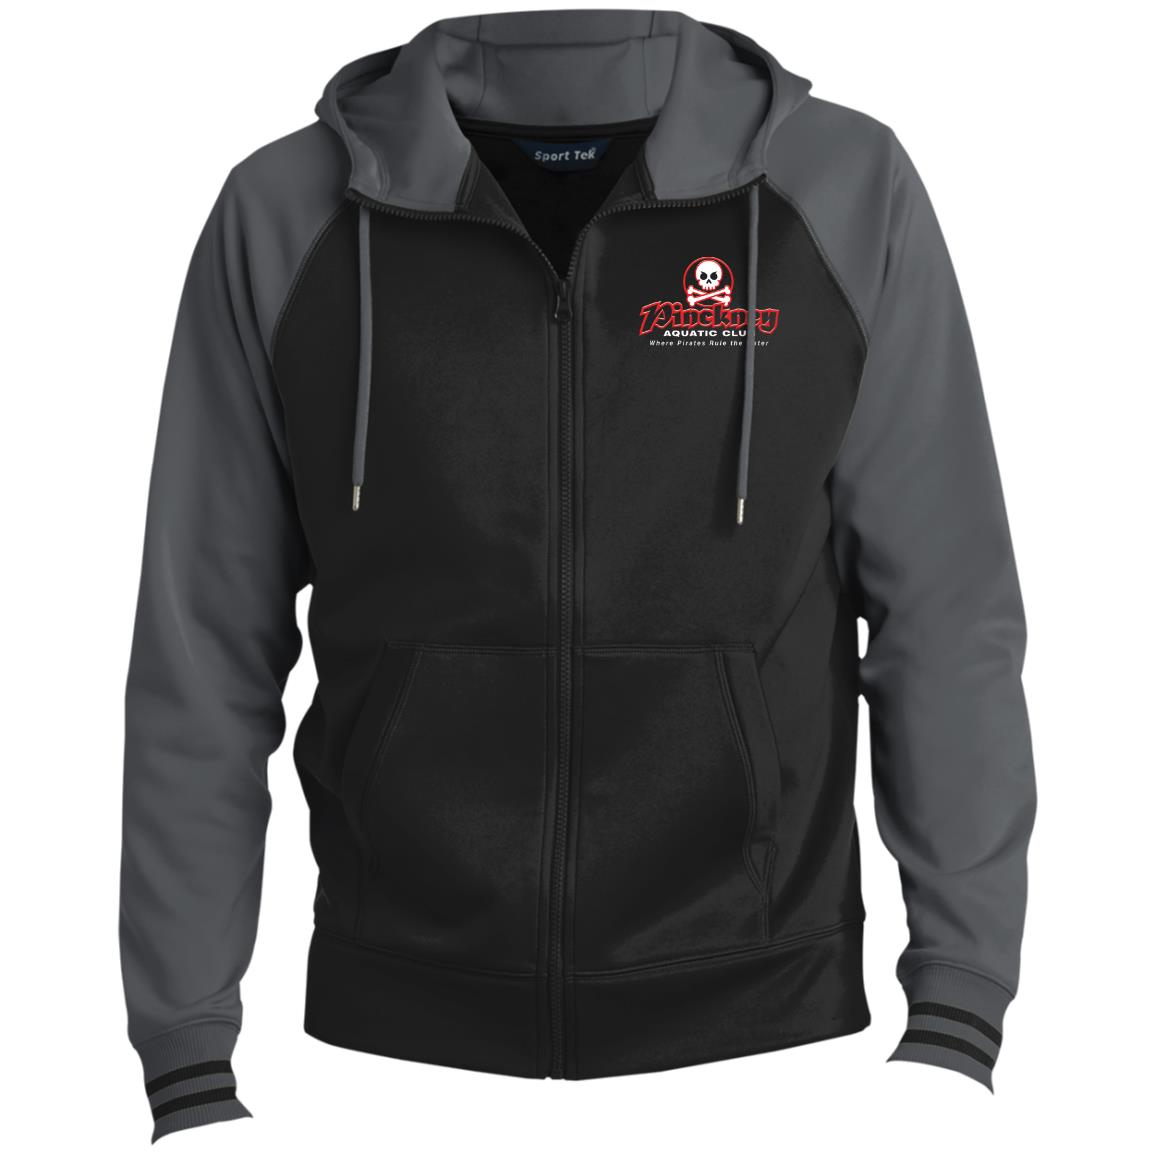 Pinckney Aquatic Club- R & W, ST236 Men's Sport-Wick® Full-Zip Hooded Jacket